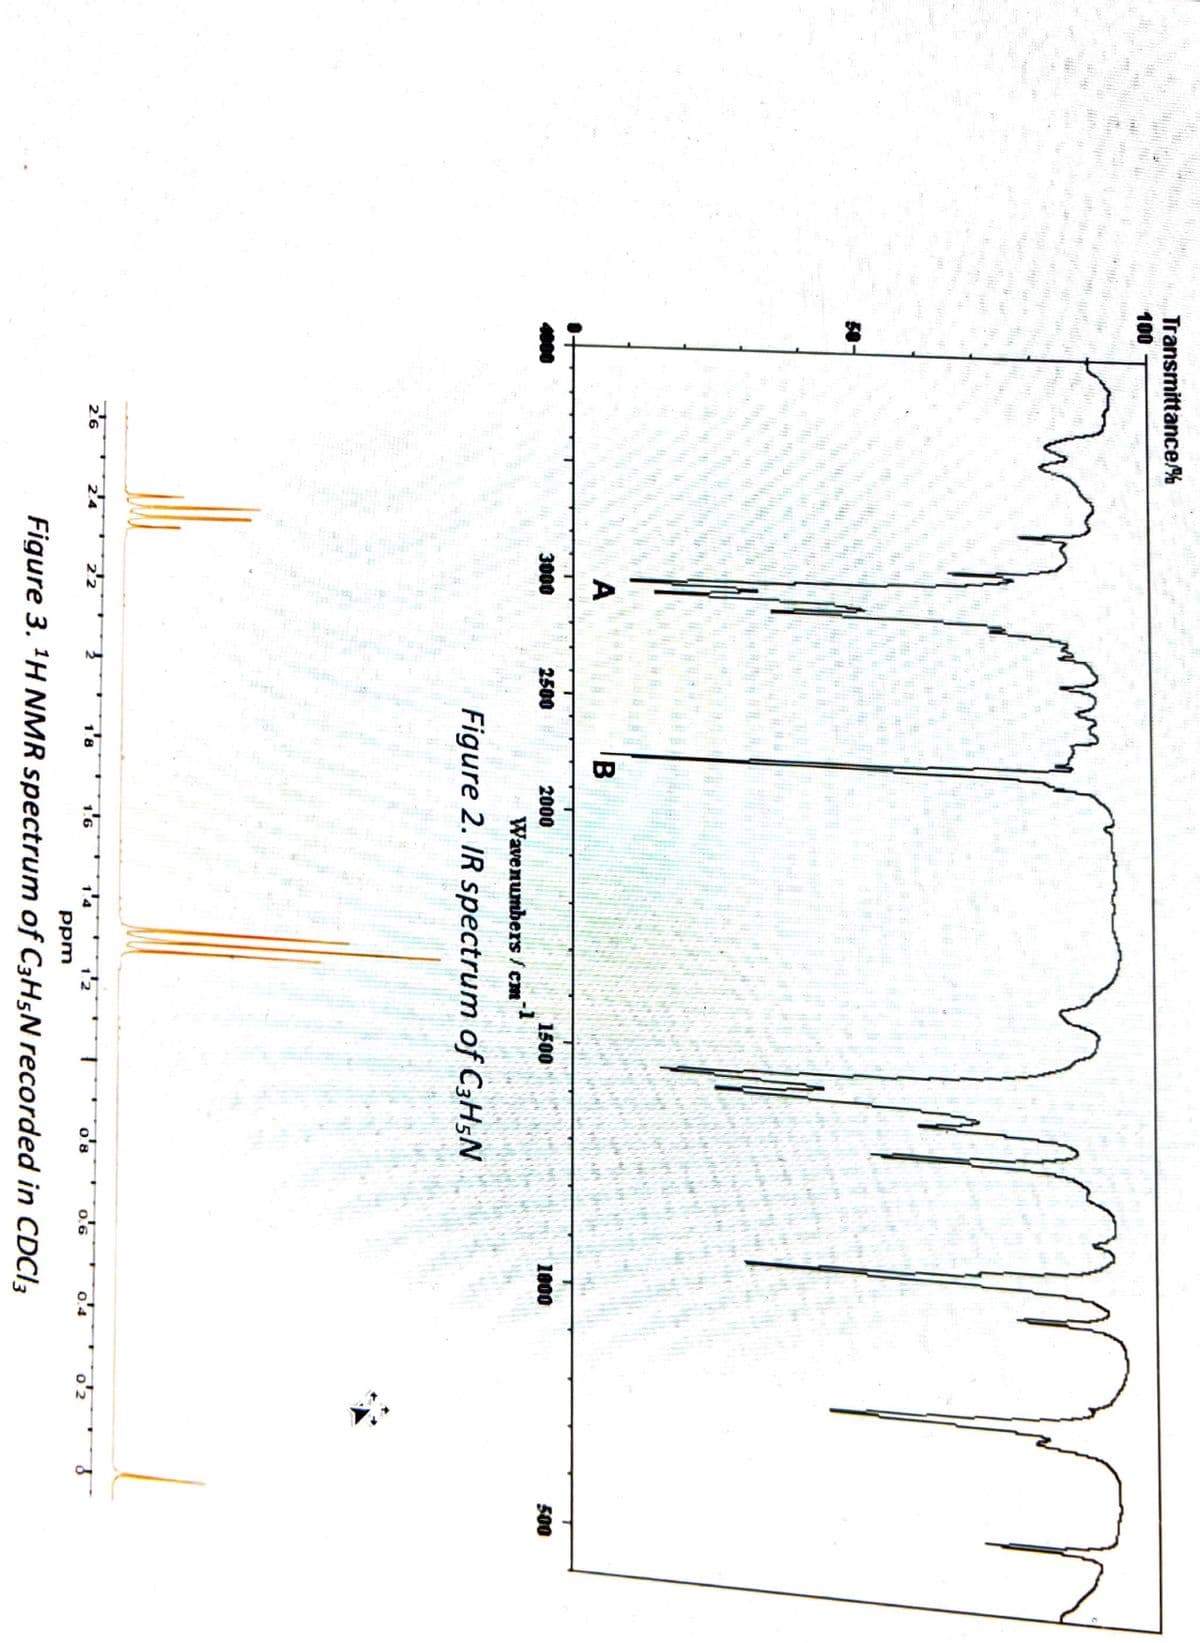 Transmittance/%
100
50
A
4000
3000
2500
2000
1500
1800
500
Wavenumbers / cm
Figure 2. IR spectrum of C3H5N
26
2'4
1'8
1'6
1'4
1'2
22
o's
o'2
ppm
Figure 3. H NMR spectrum of C3H5N recorded in CDCI3
